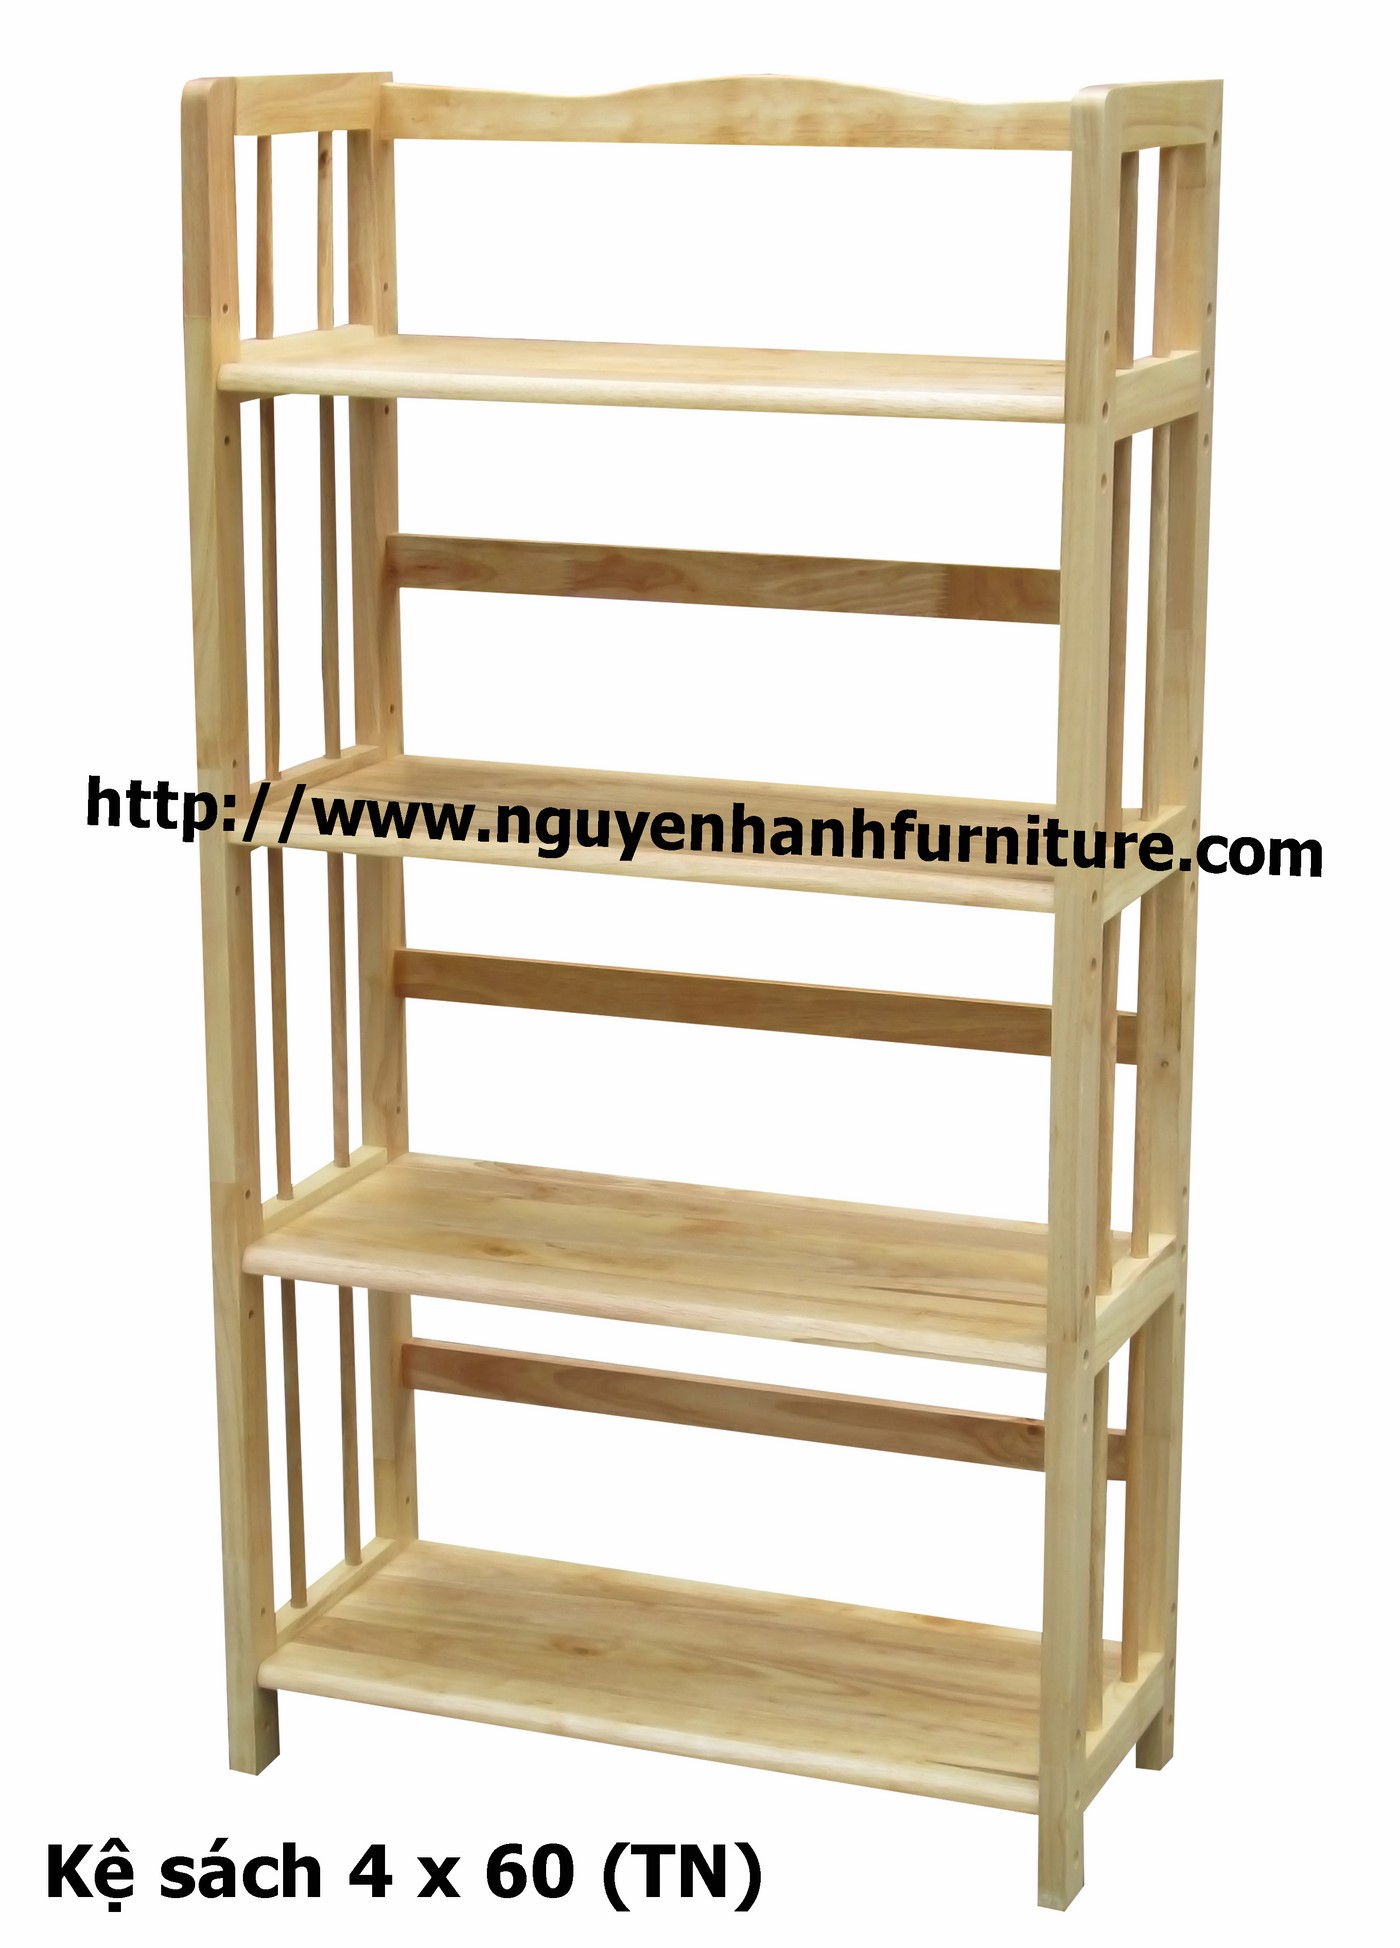 Name product: 4 storey Adjustable Bookshelf 60 (natural) - Dimensions: 63 x 28 x 120 (H) - Description: Wood natural rubber